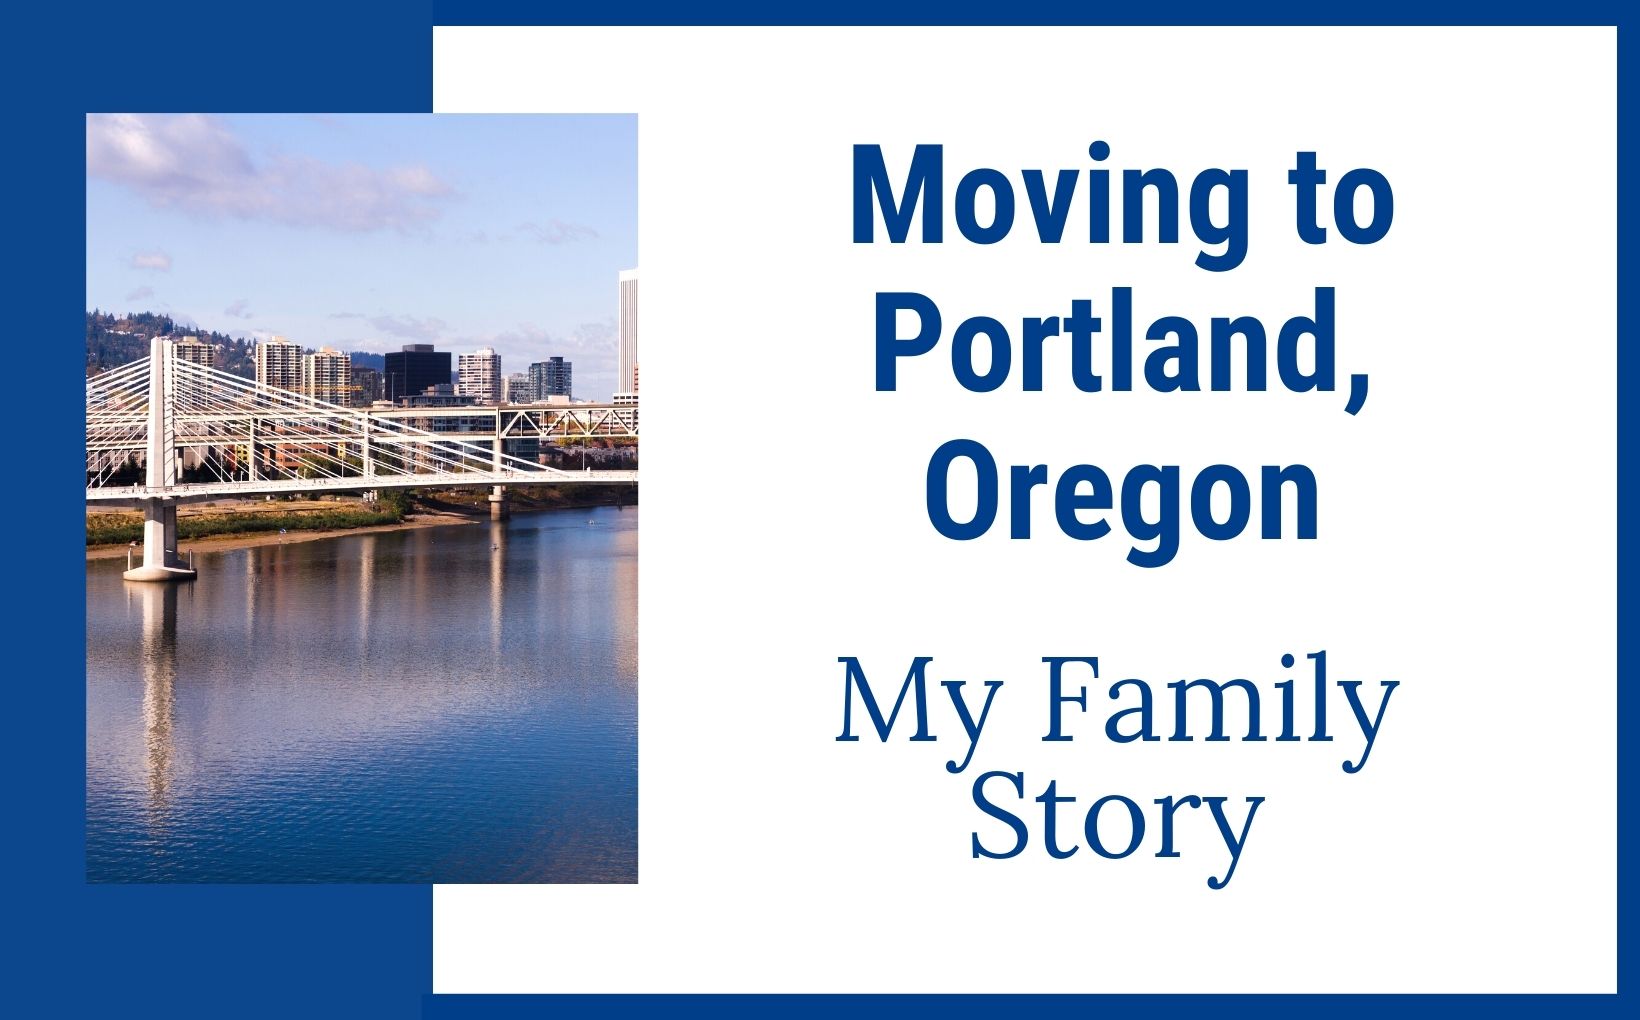 Moving to Portland Oregon feature image